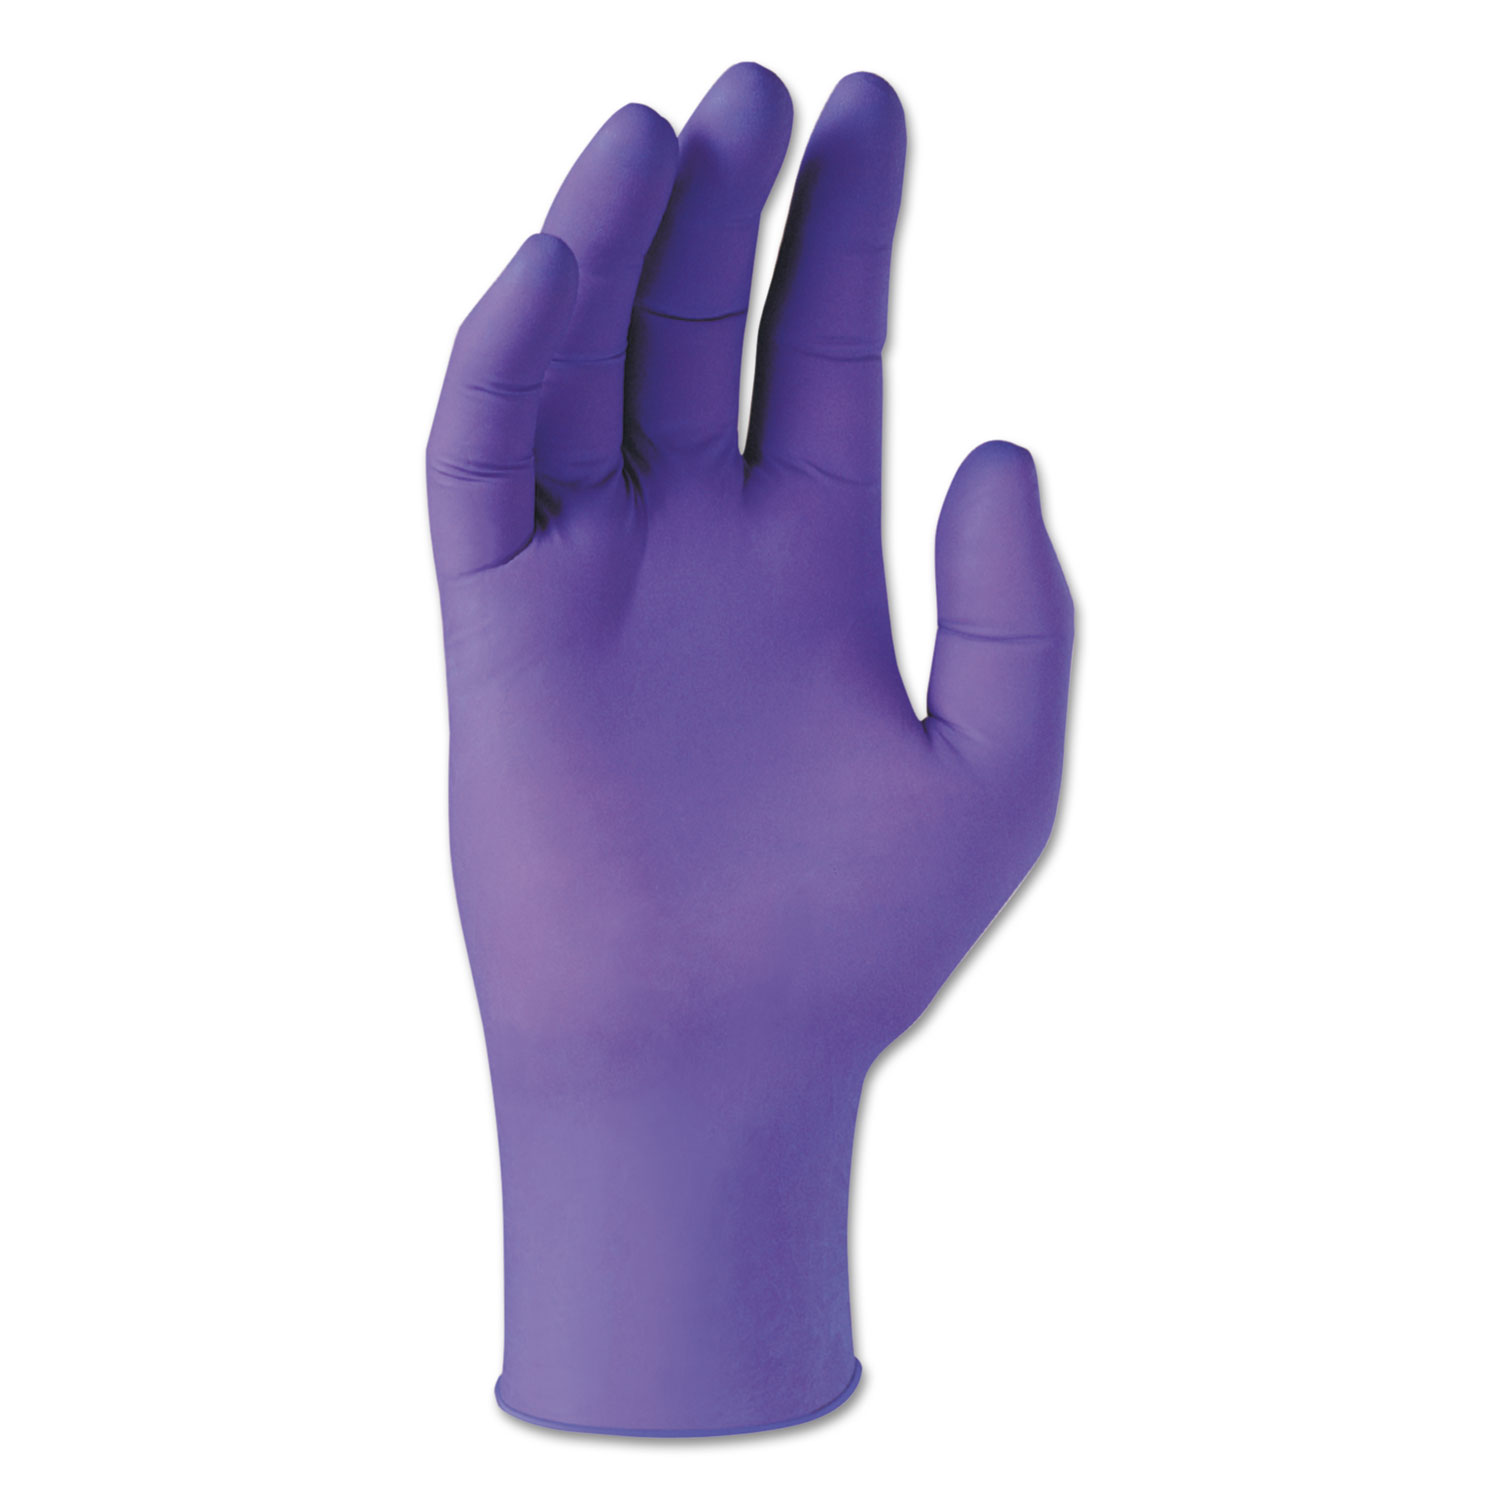  Kimberly-Clark Professional* KCC 55080 PURPLE NITRILE Exam Gloves, 242 mm Length, X-Small, 6 mil, Purple, 100/Box (KCC55080) 